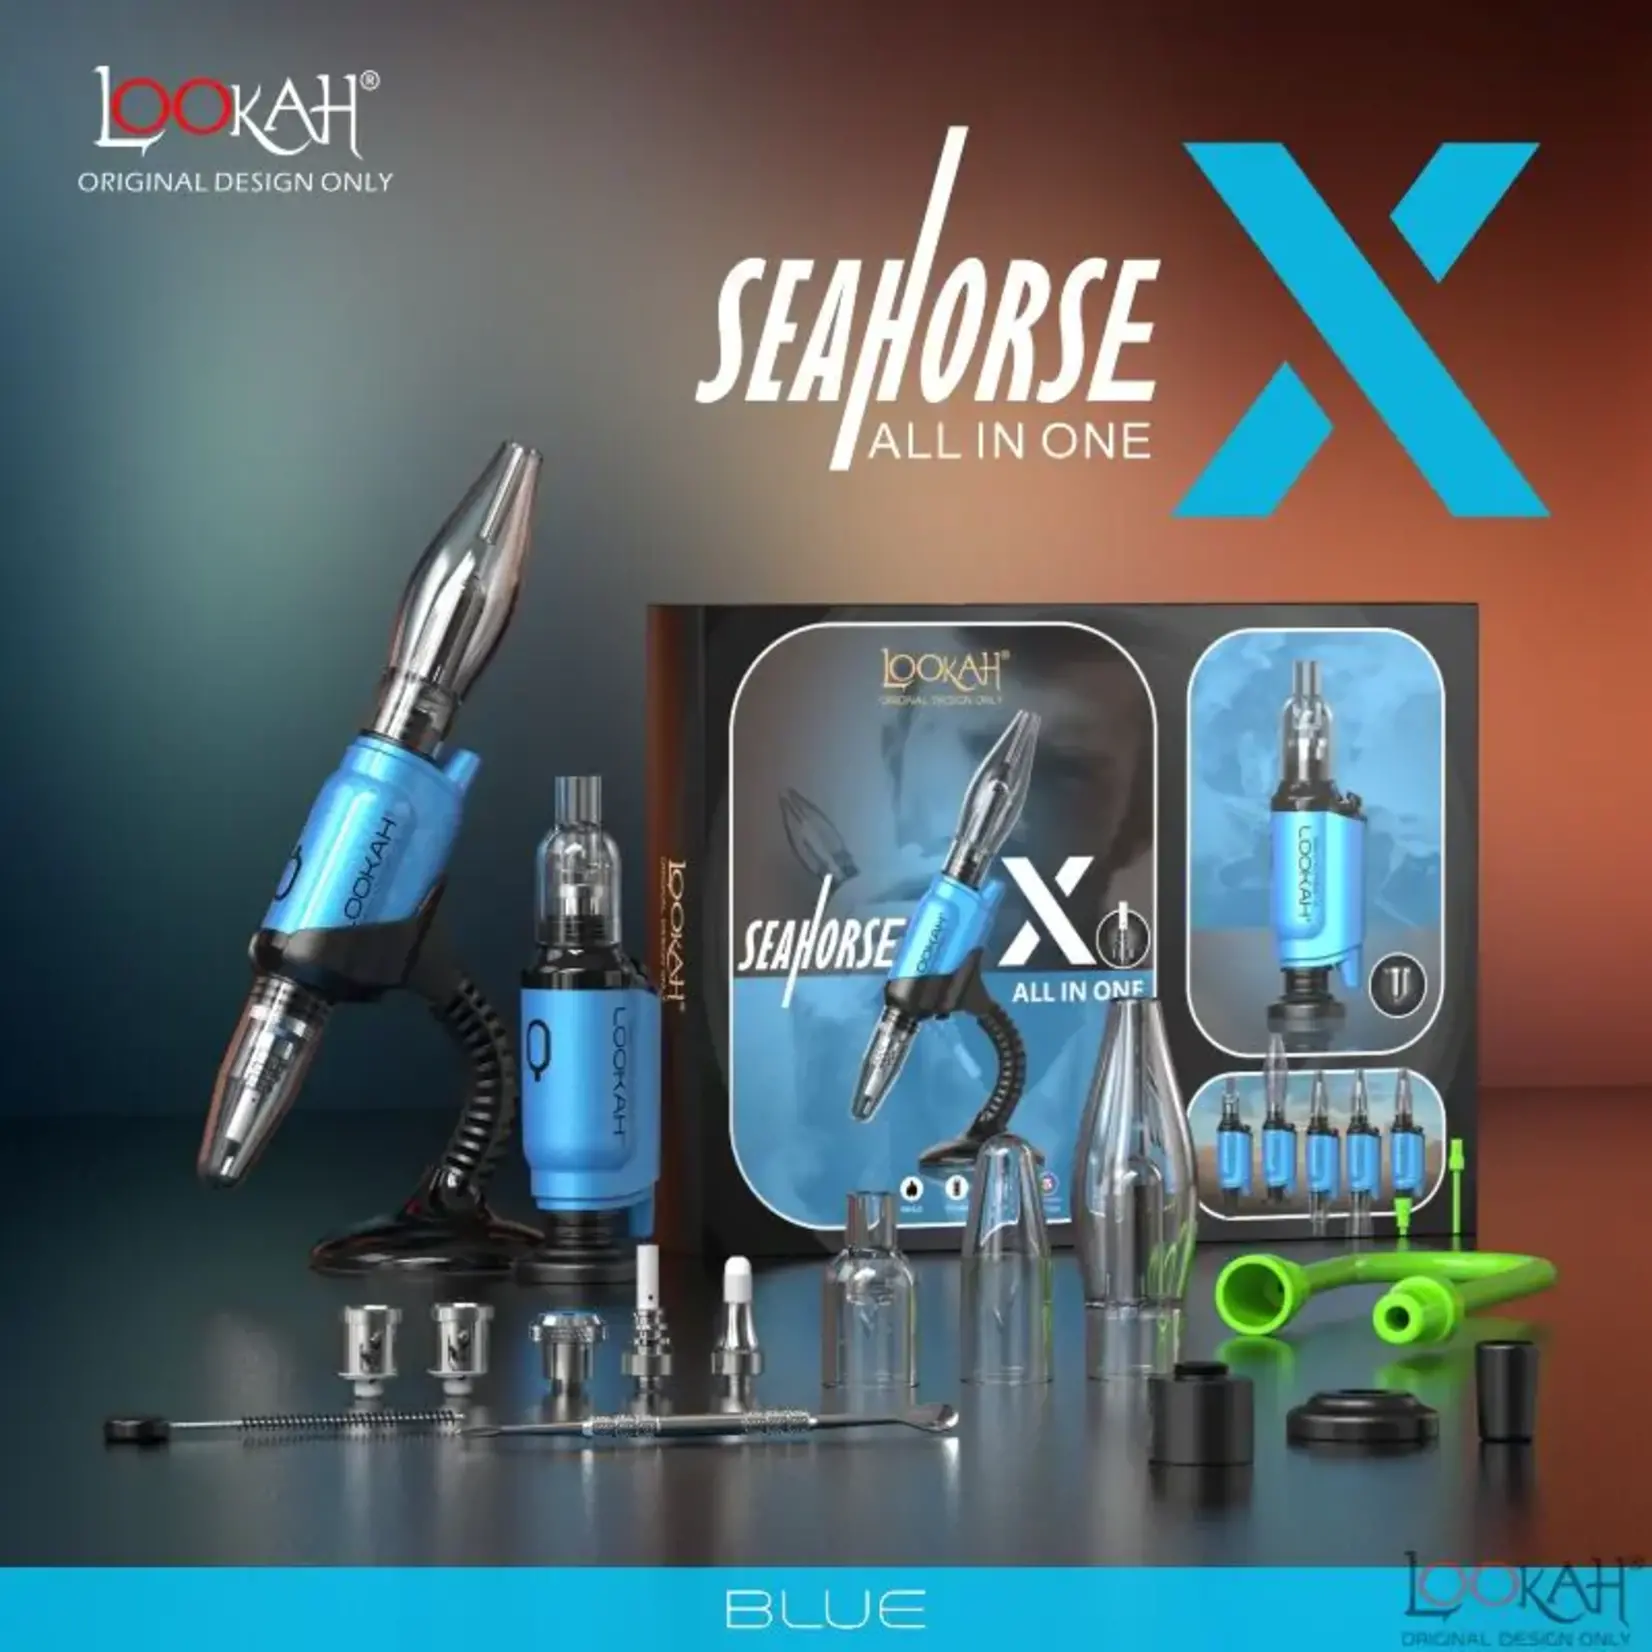 Lookah Glass Seahorse X